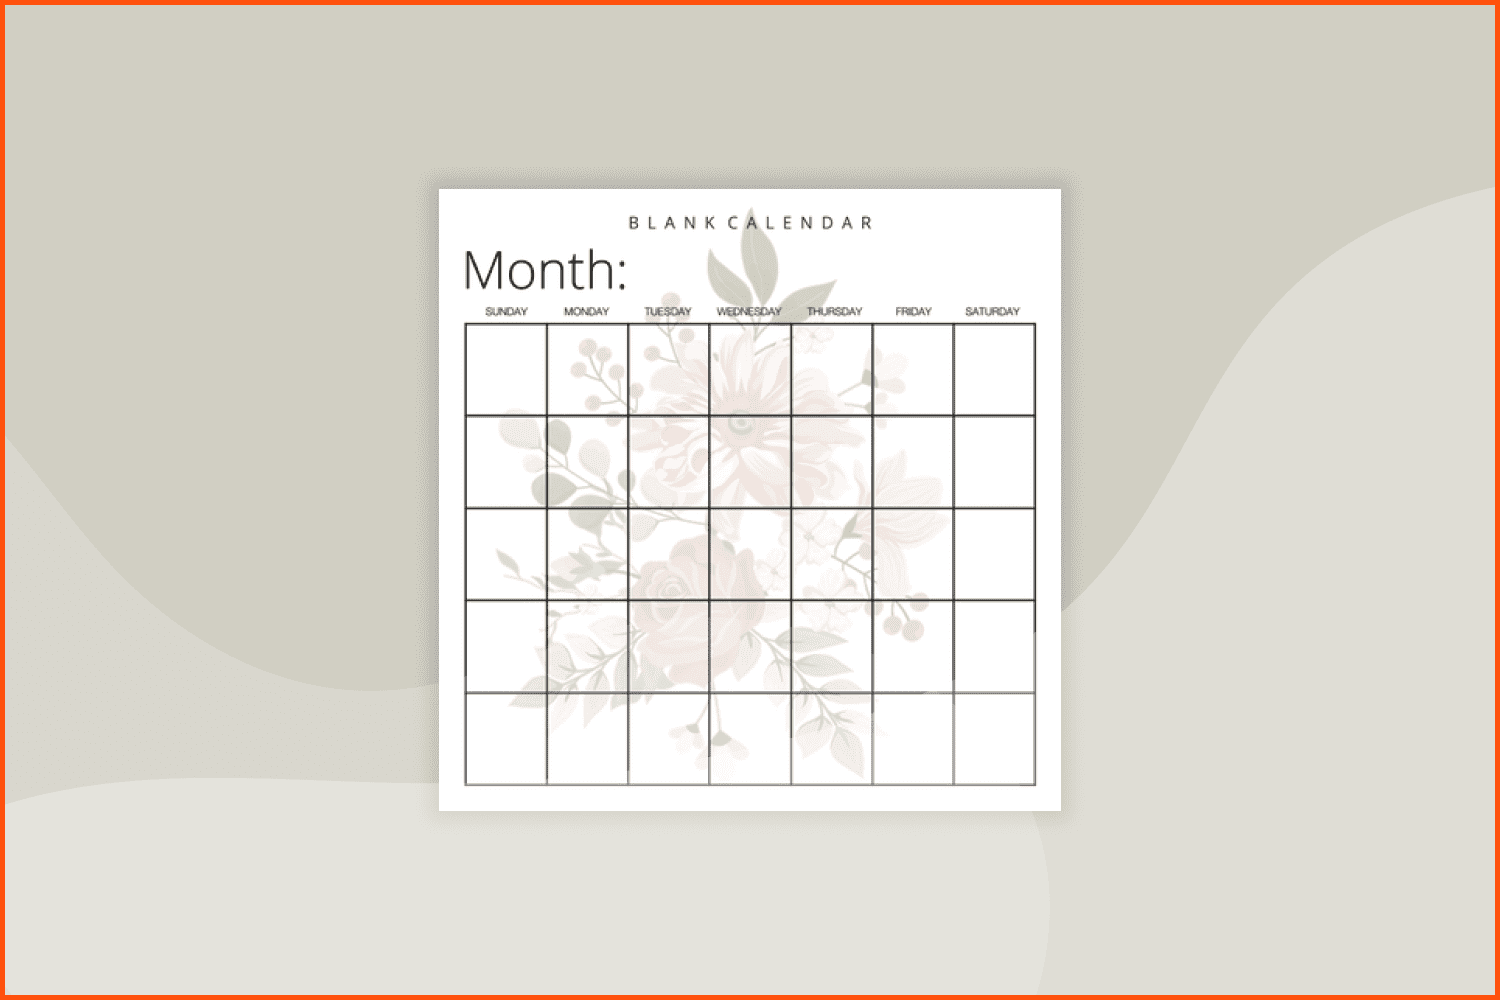 Blank Calendar: Pretty Flowers, Undated Planner for Organizing.